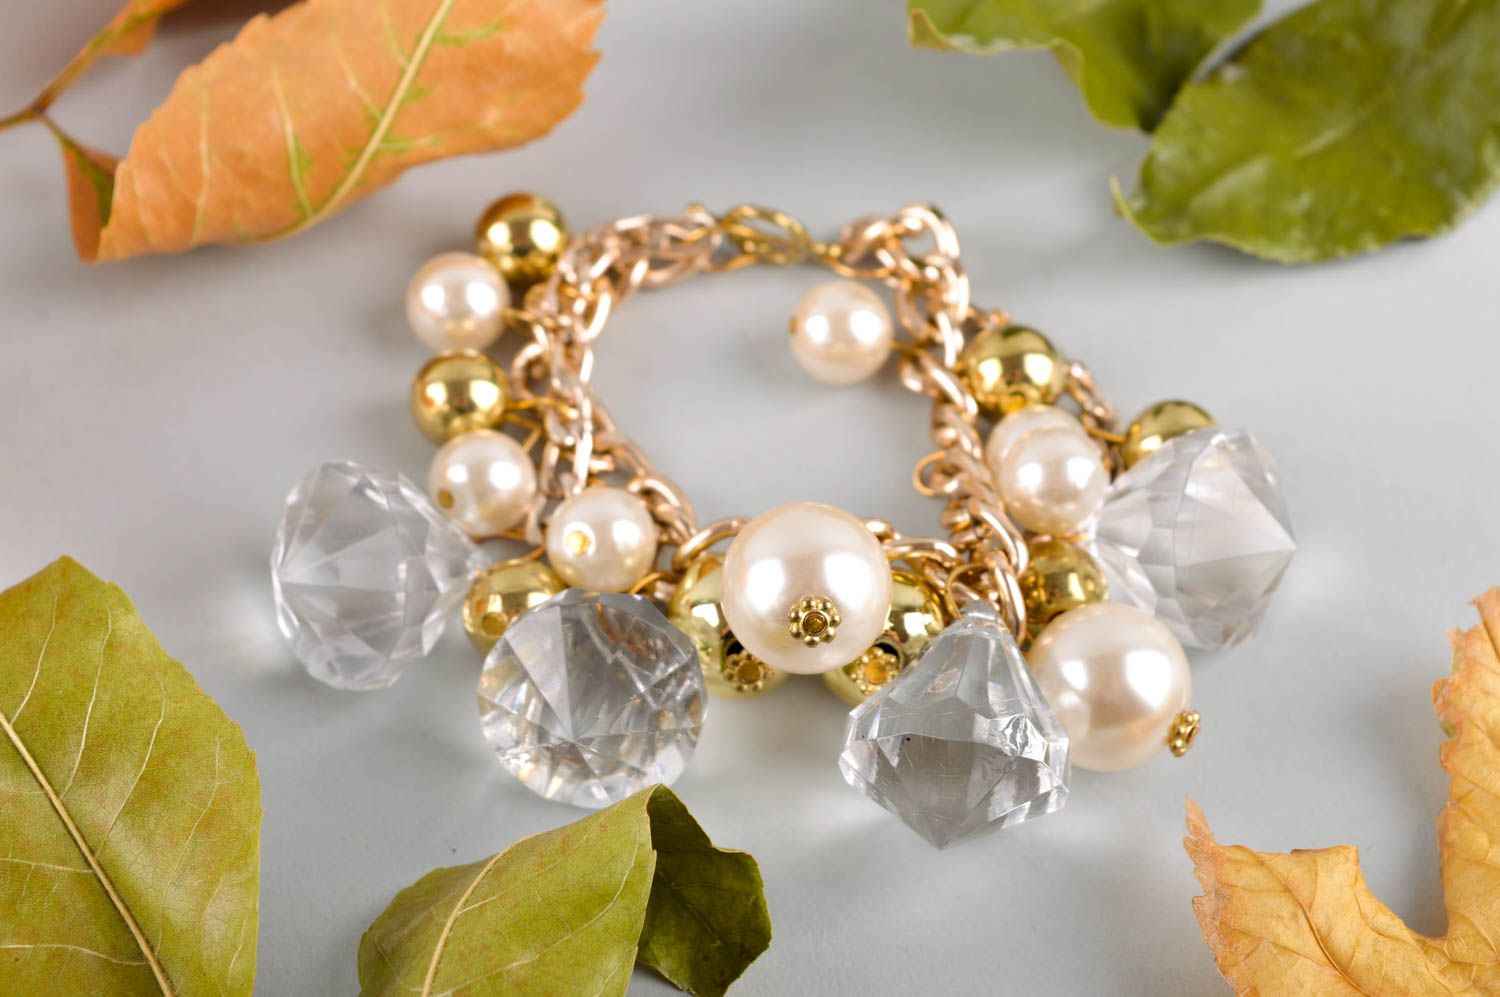 Handmade beautiful bracelet elite cute jewelry stylish lovely accessories photo 1